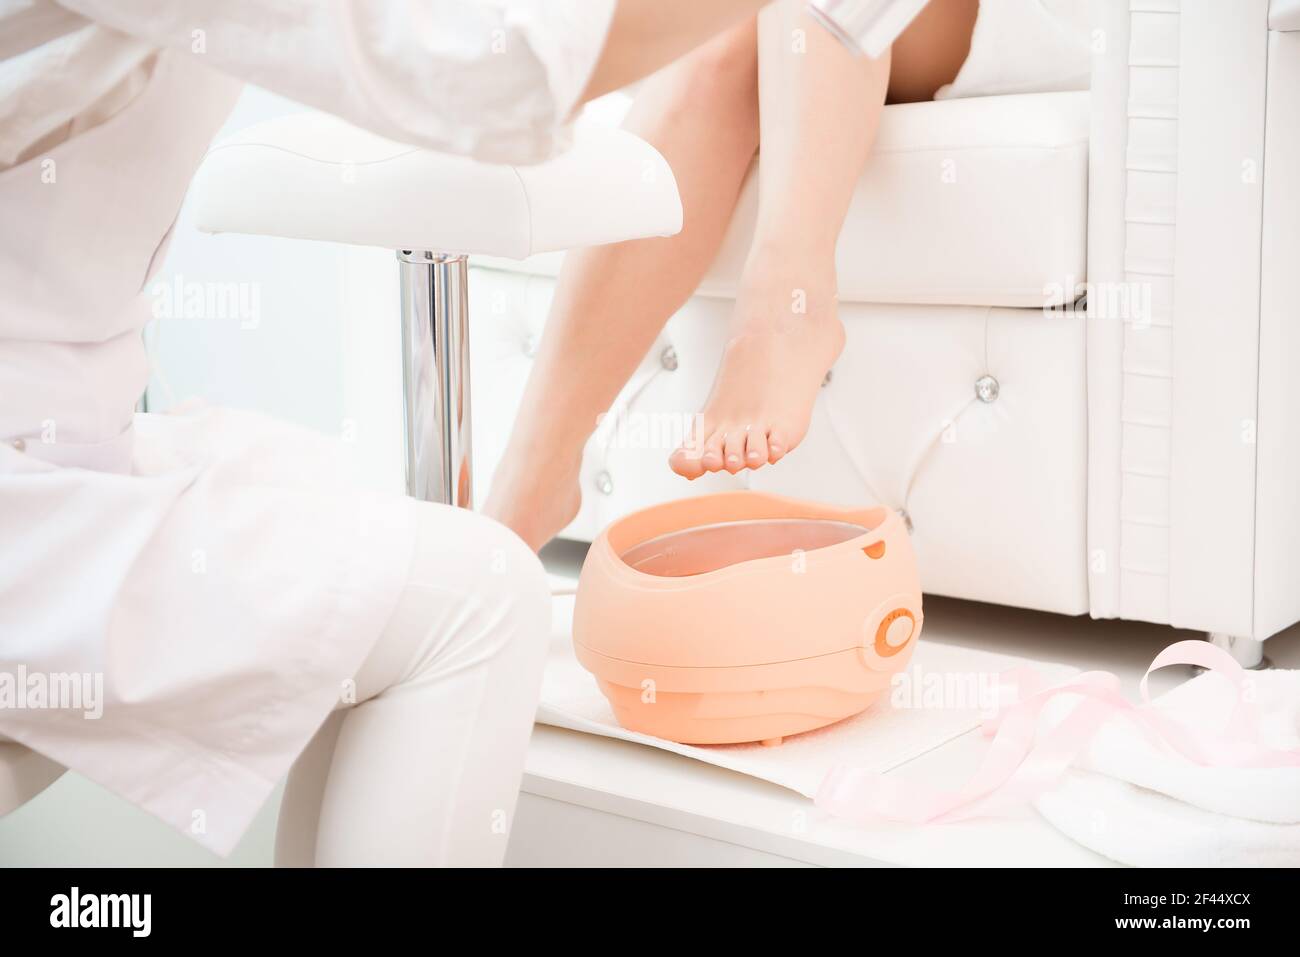 Wax bath for feet at beauty spa salon. Paraffin wax treatments for feet. Stock Photo